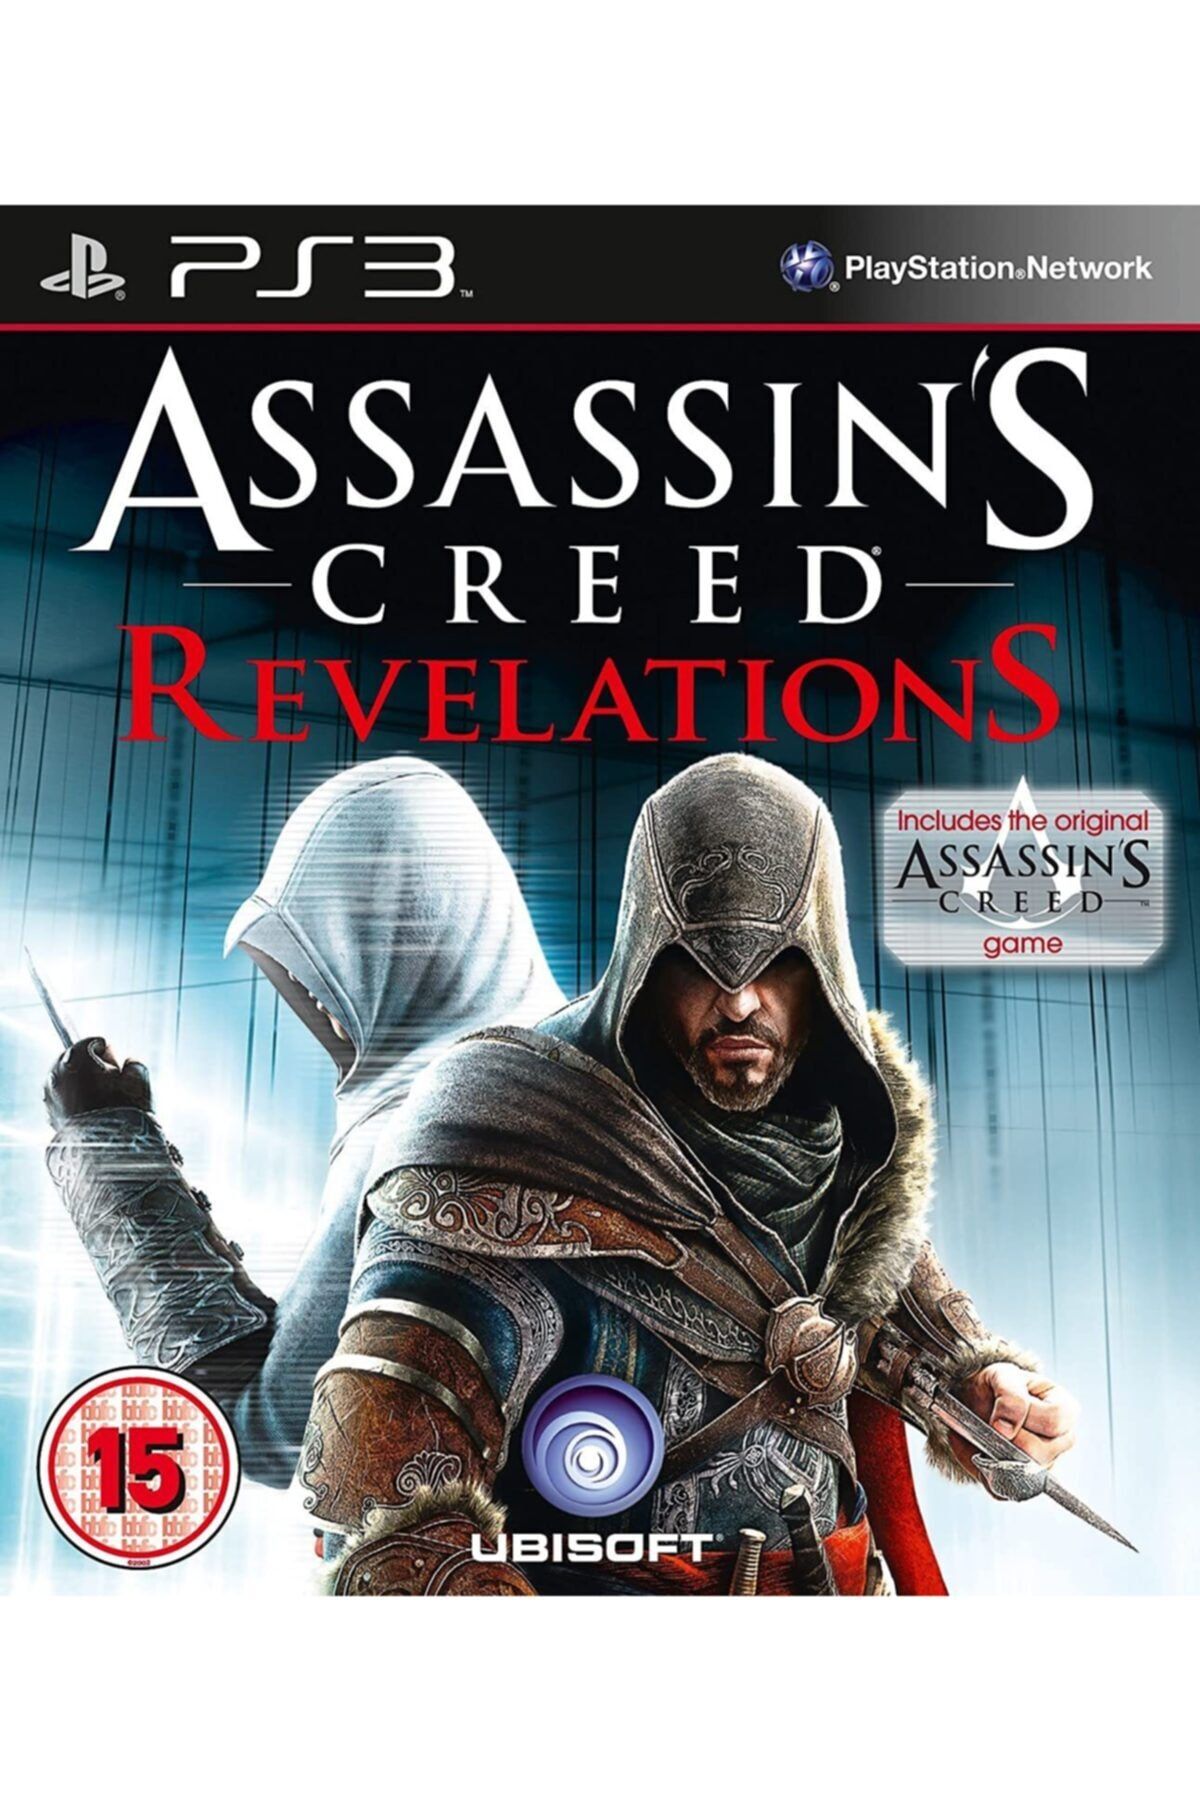 Игра assassins creed ps4. Assassins Creed 2 специальное издание ps3. Assassin's Creed Revelations ps3. Assassins Creed 1 ps3. Assassin's Creed ps4.